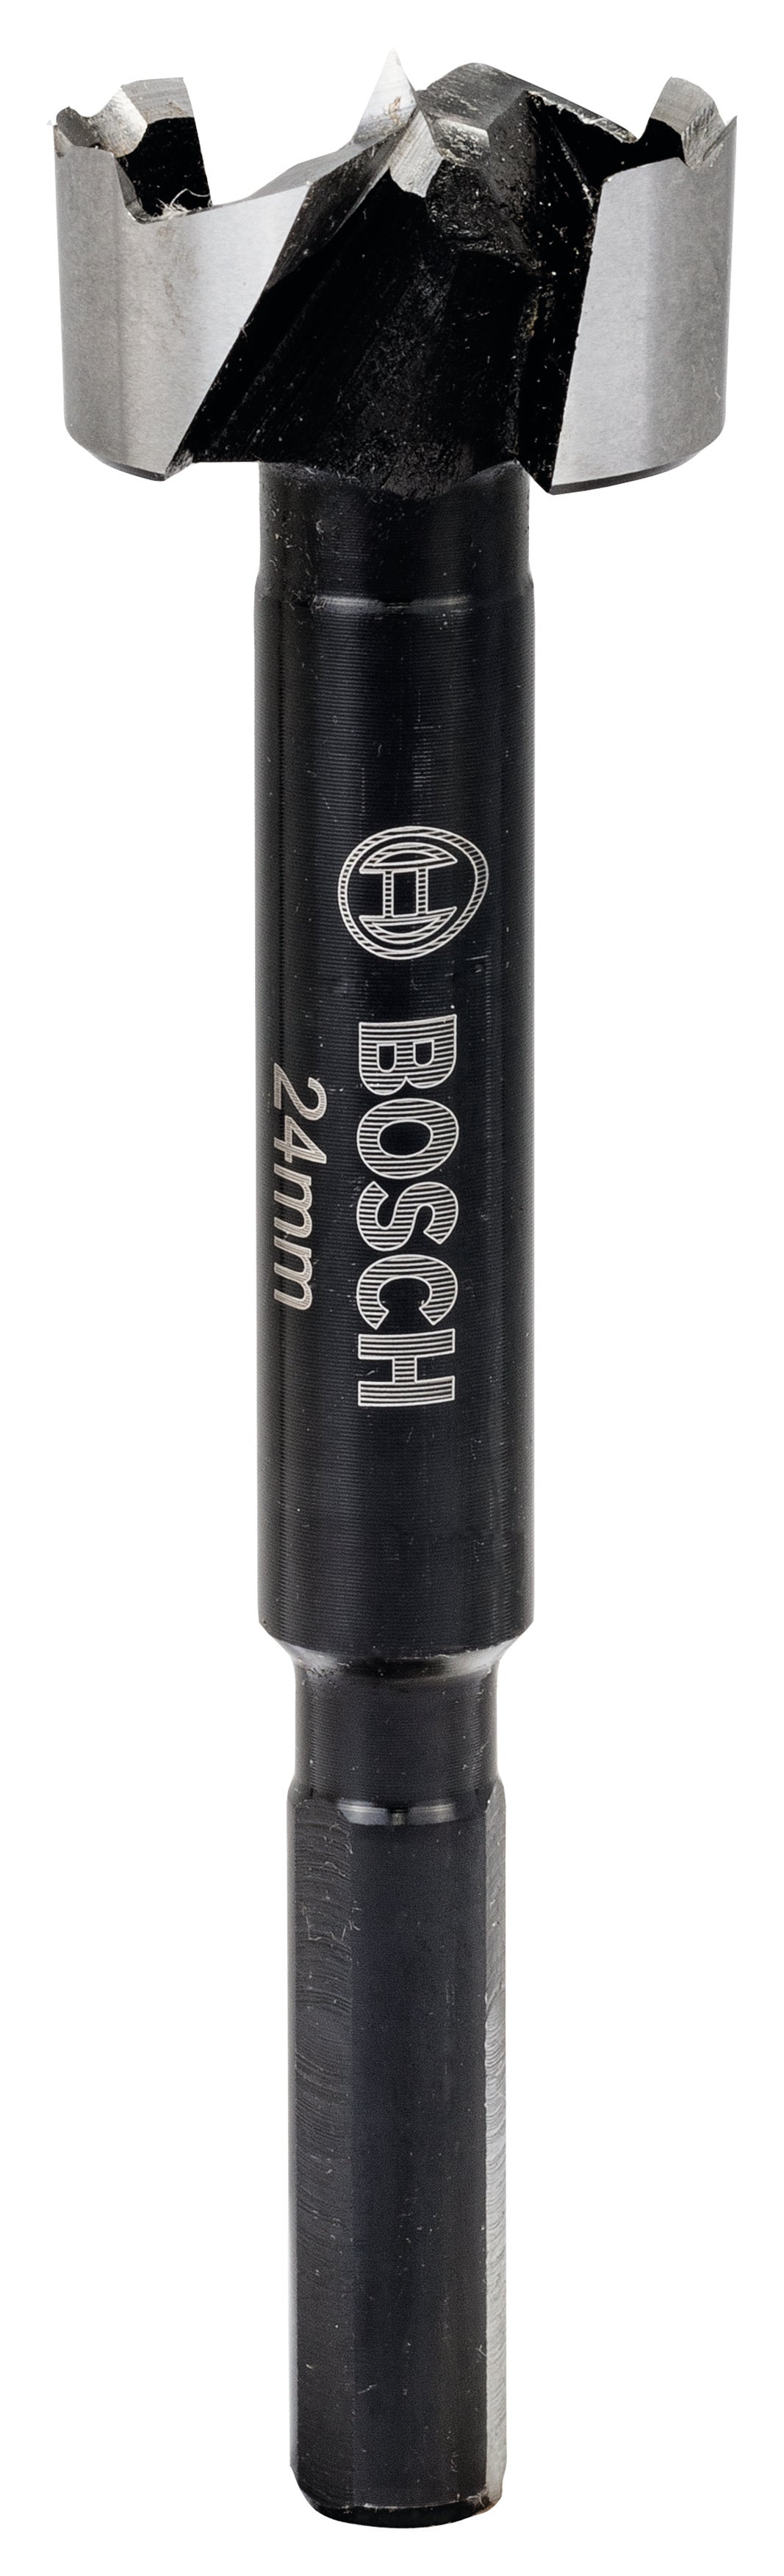 Bosch Professional 24mm Forstner Bit